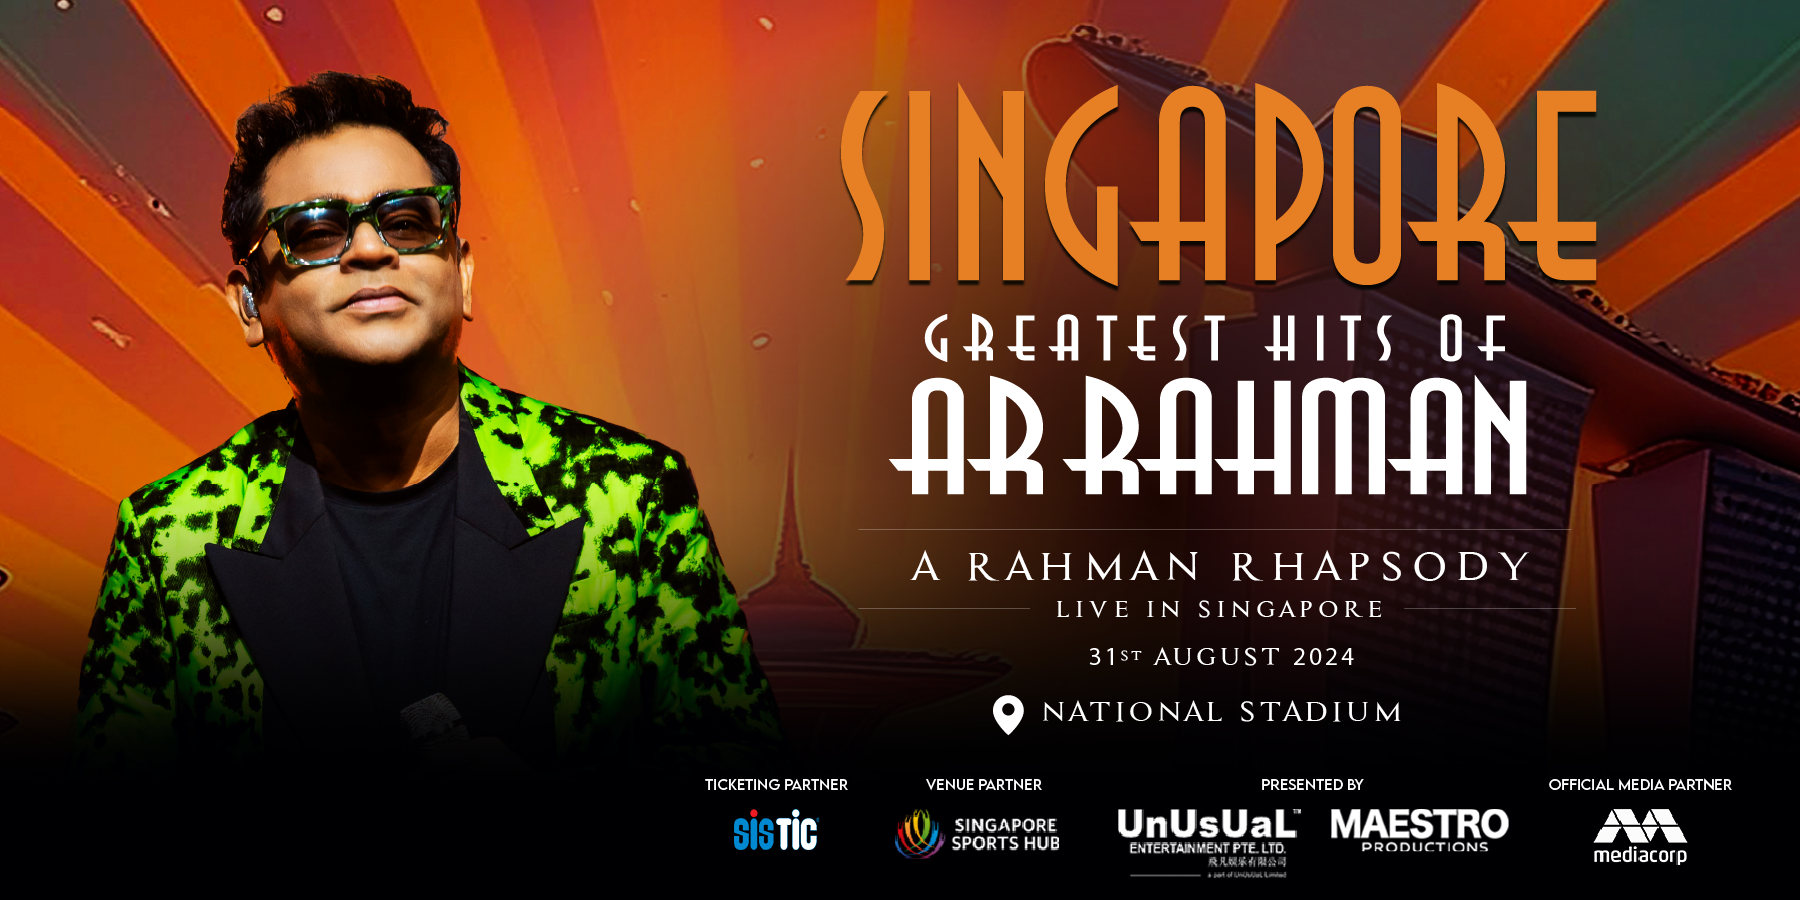 Greatest Hits of AR Rahman, A Rahman Rhapsody Live In Singapore